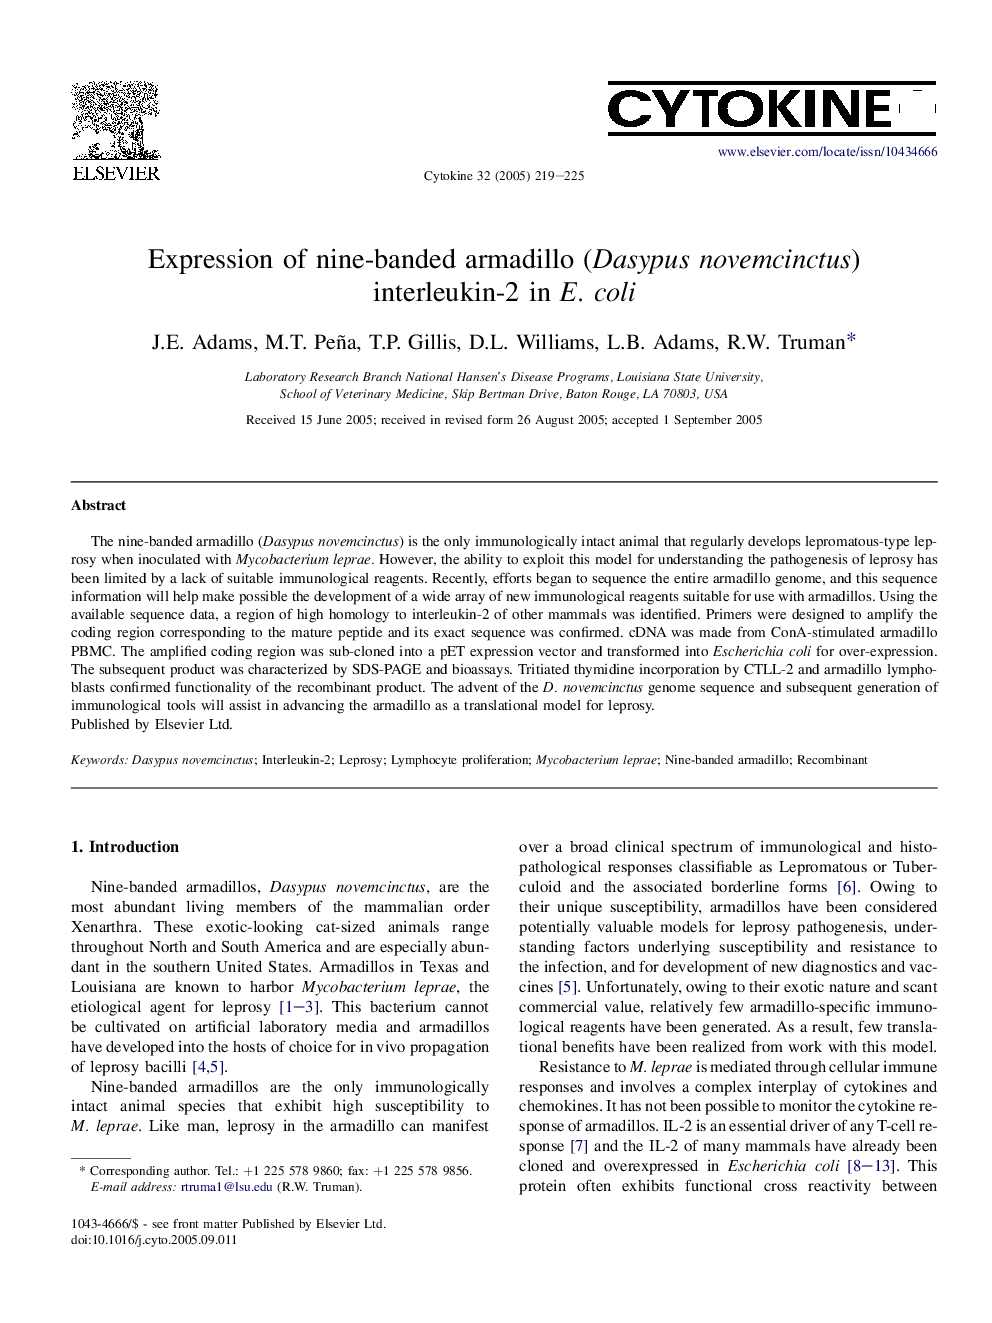 Expression of nine-banded armadillo (Dasypus novemcinctus) interleukin-2 in E. coli